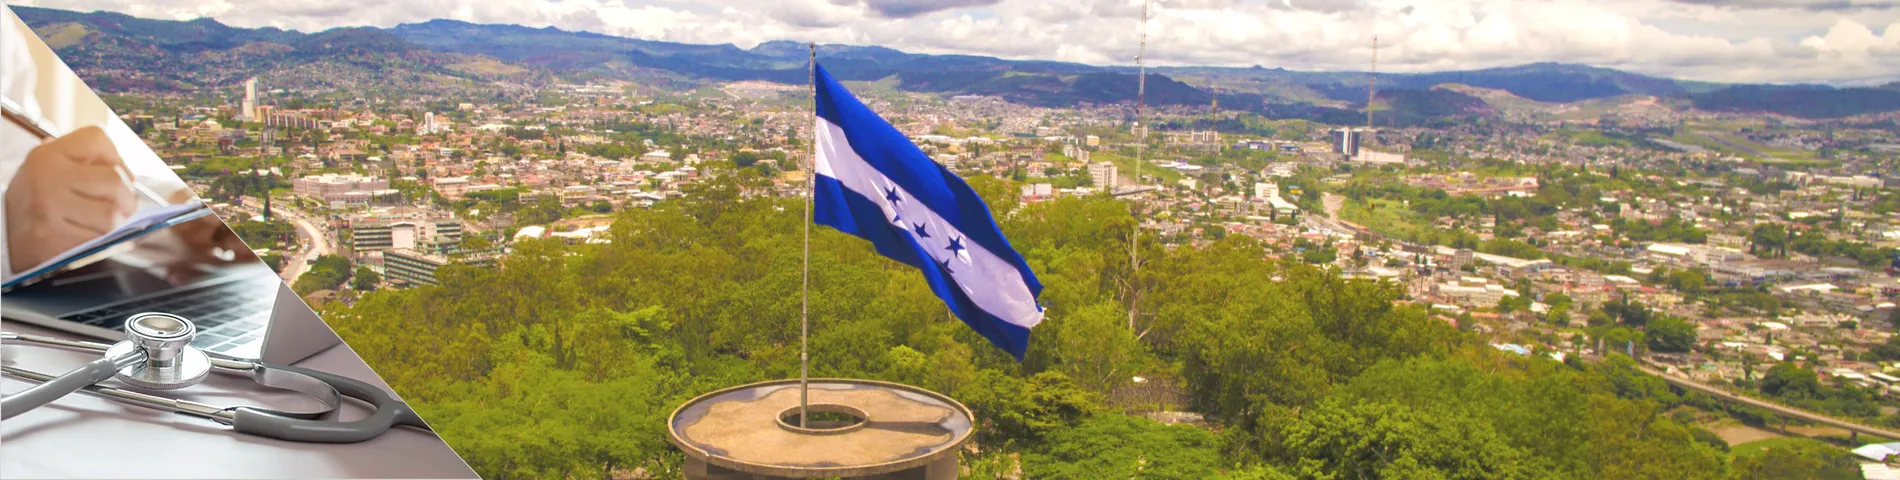 Honduras - Španělština pro Doktory a sestry